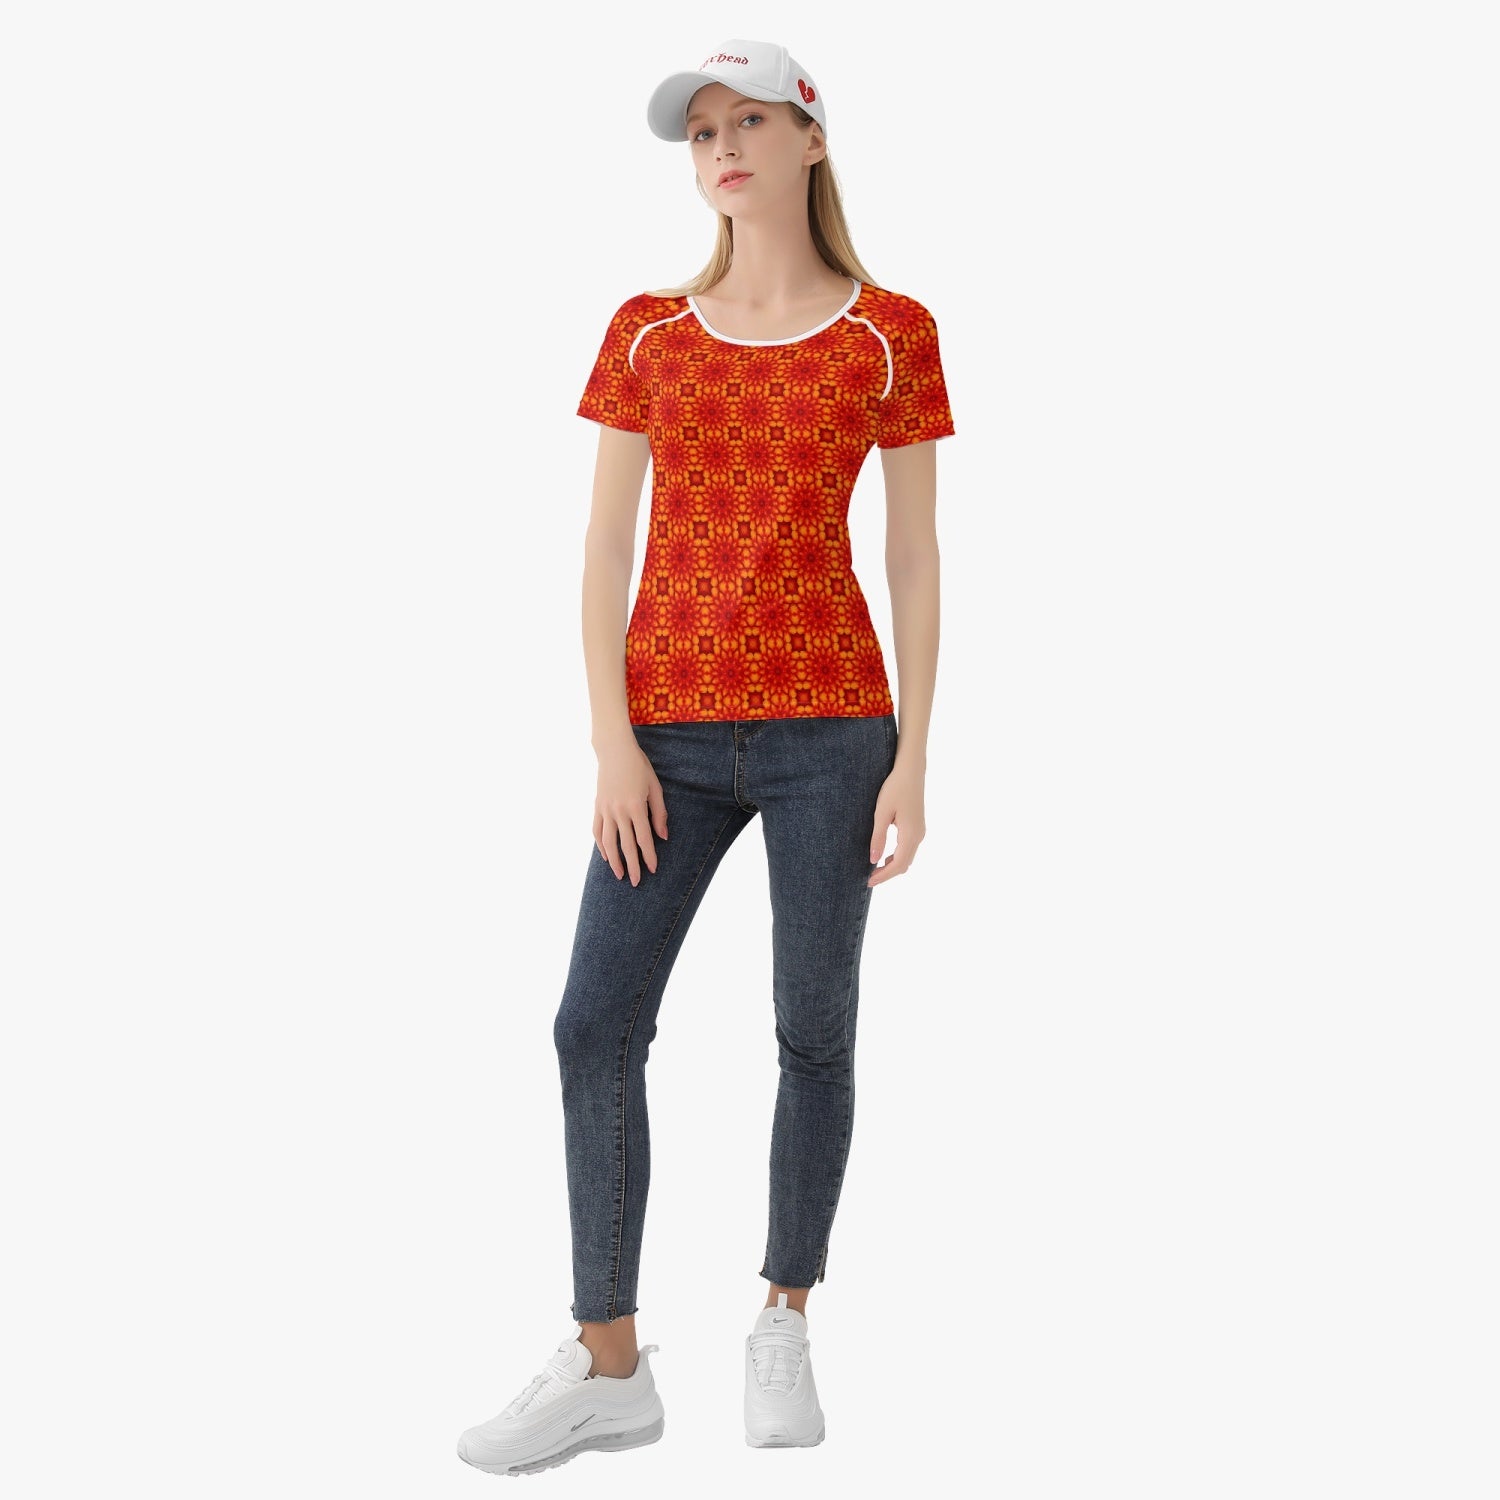 Orange Sacral Chacra Handmade Yoga Top for Women sports T-shirt, By Sensus Studio Design